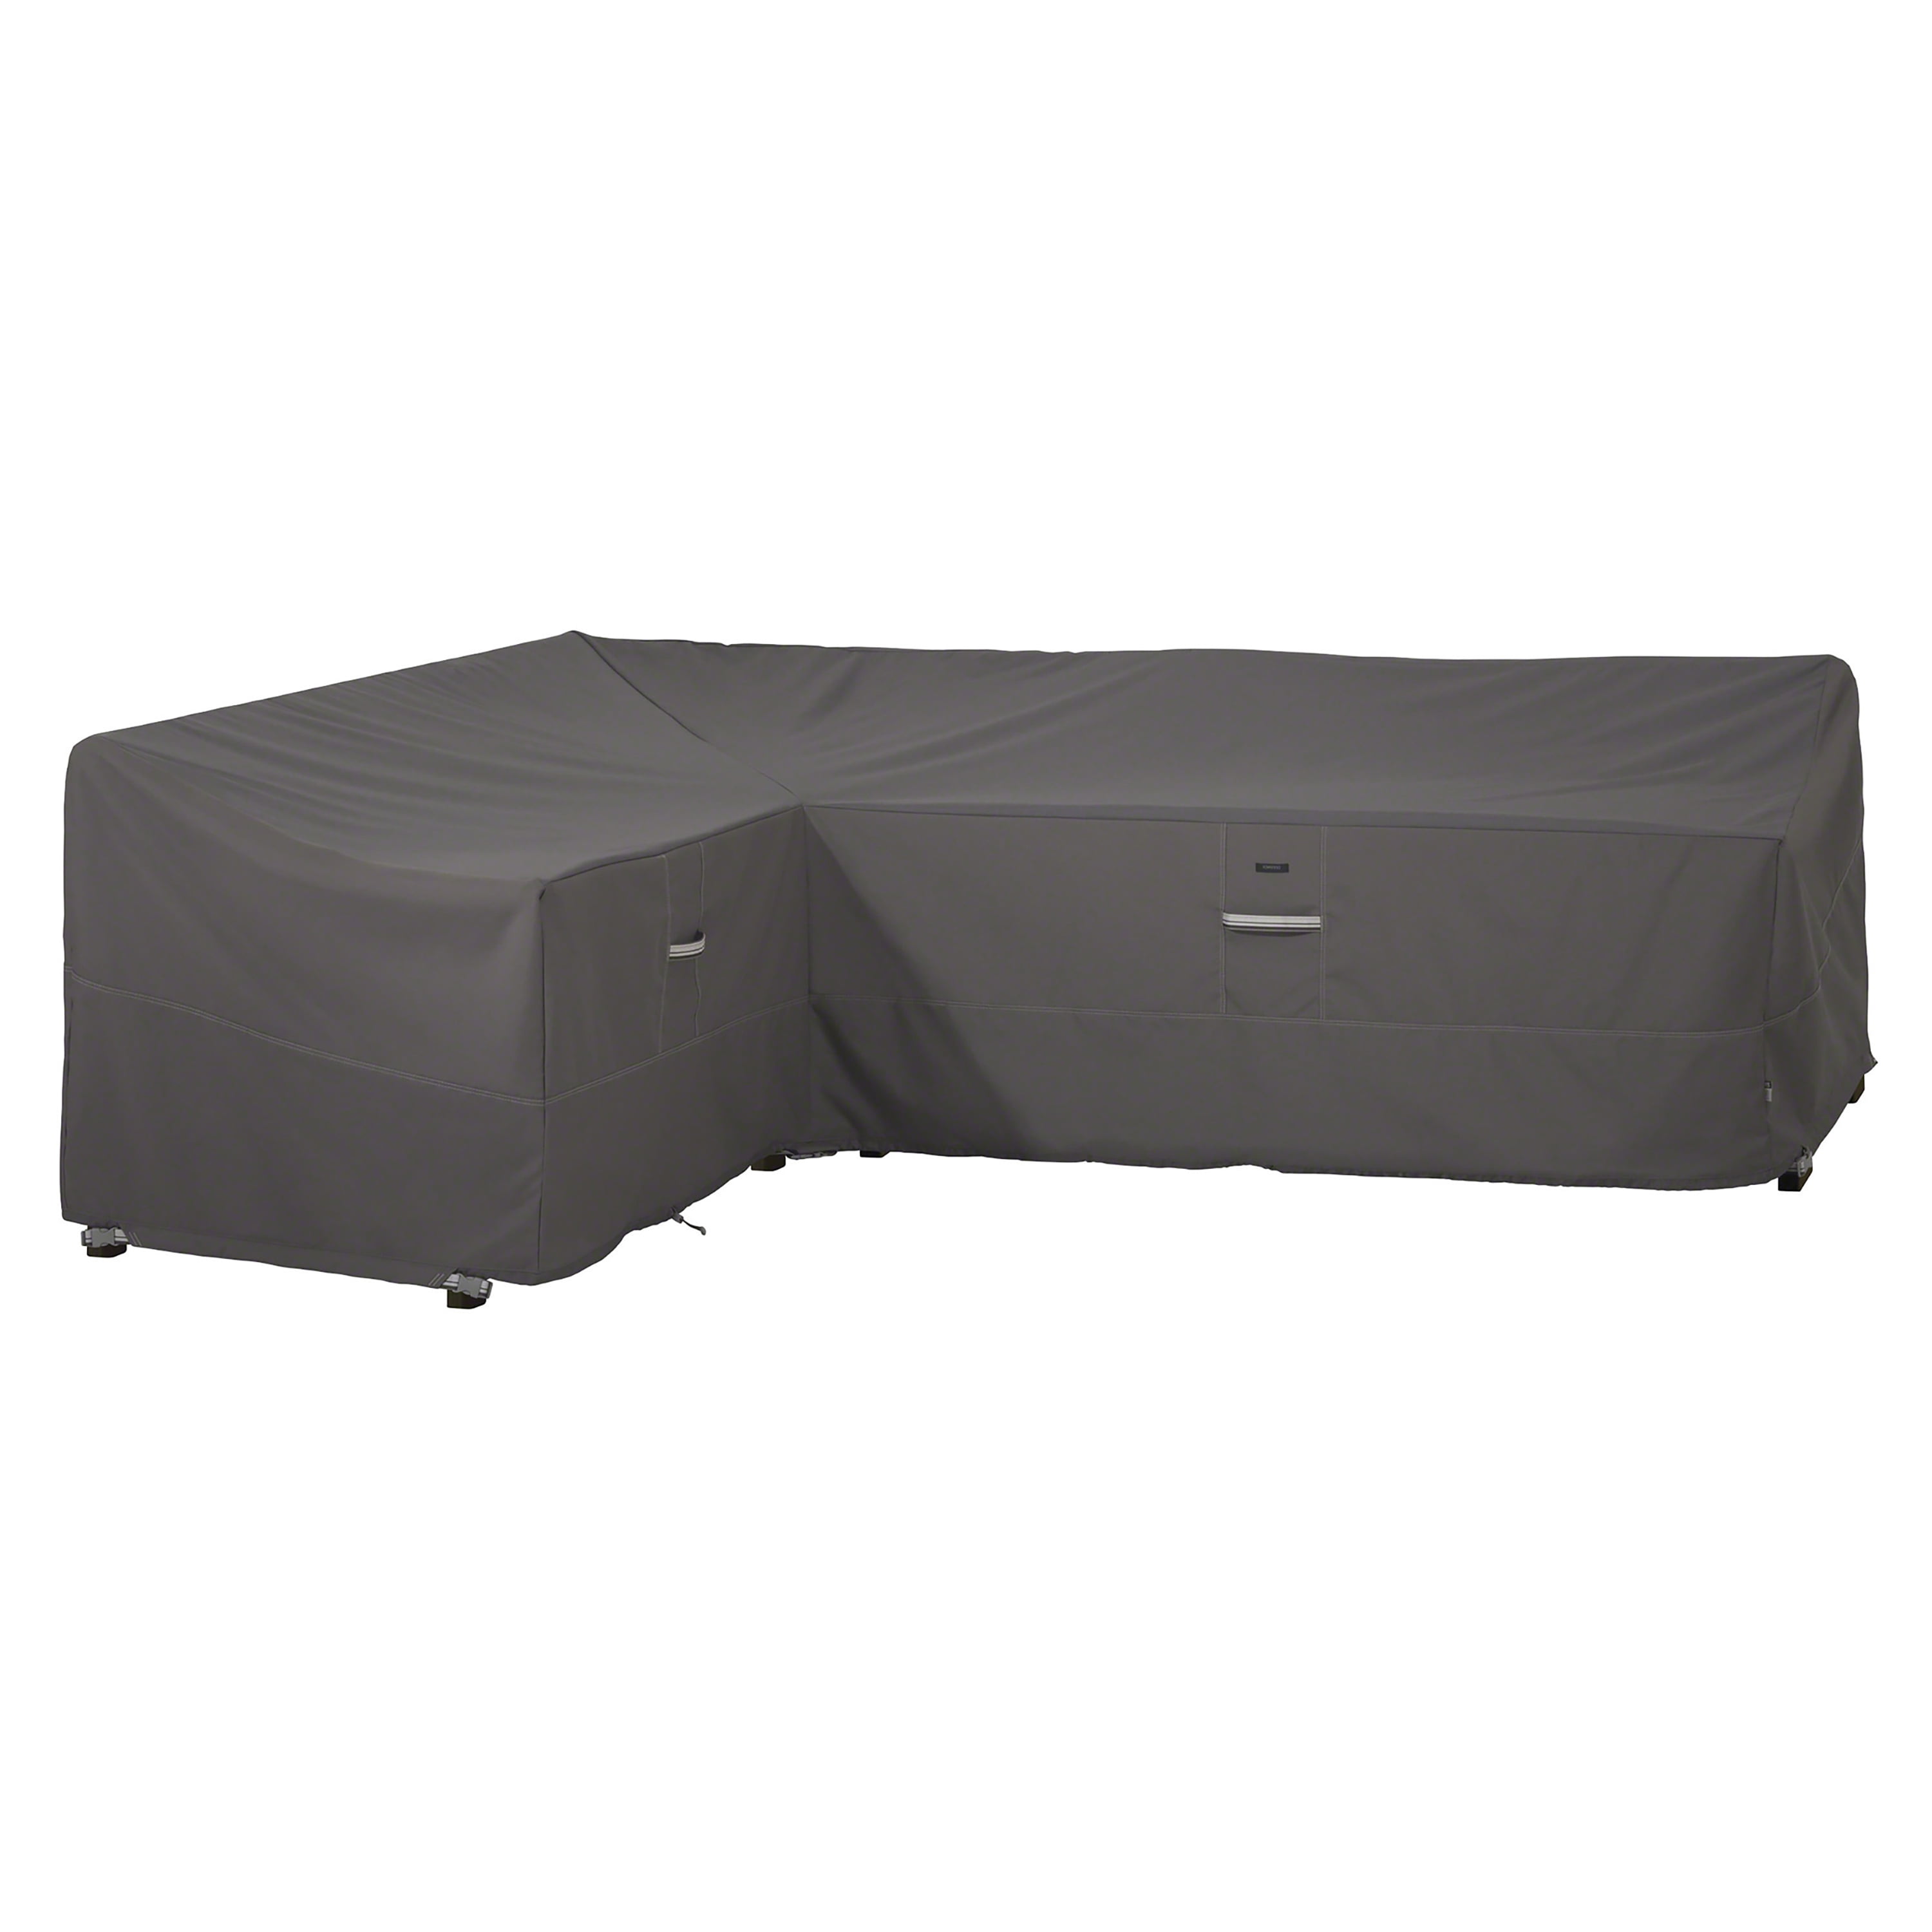 Black 78Henstridge Waterproof L-shape Garden Furniture Cover Dustproof Outdoor L Shape Black Furniture Protector with Storage Bag 215 x 215 x 87 cm